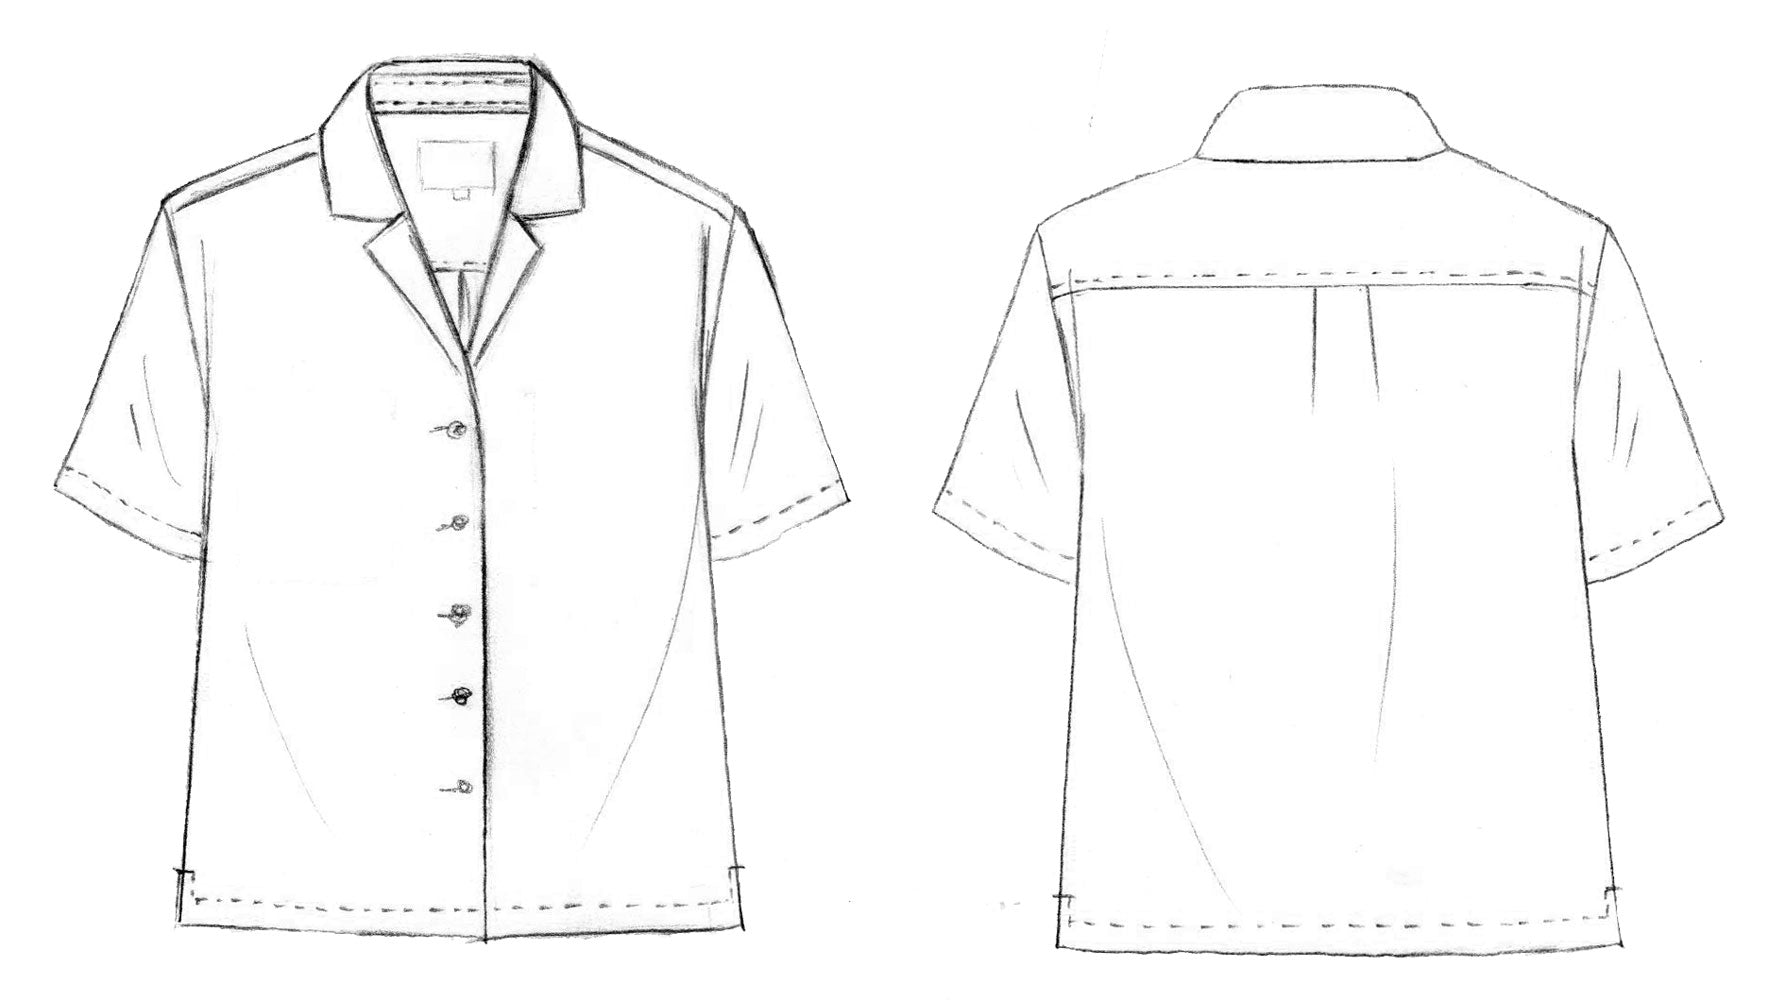 Unisex Bowling Shirt Sketch by Saywood